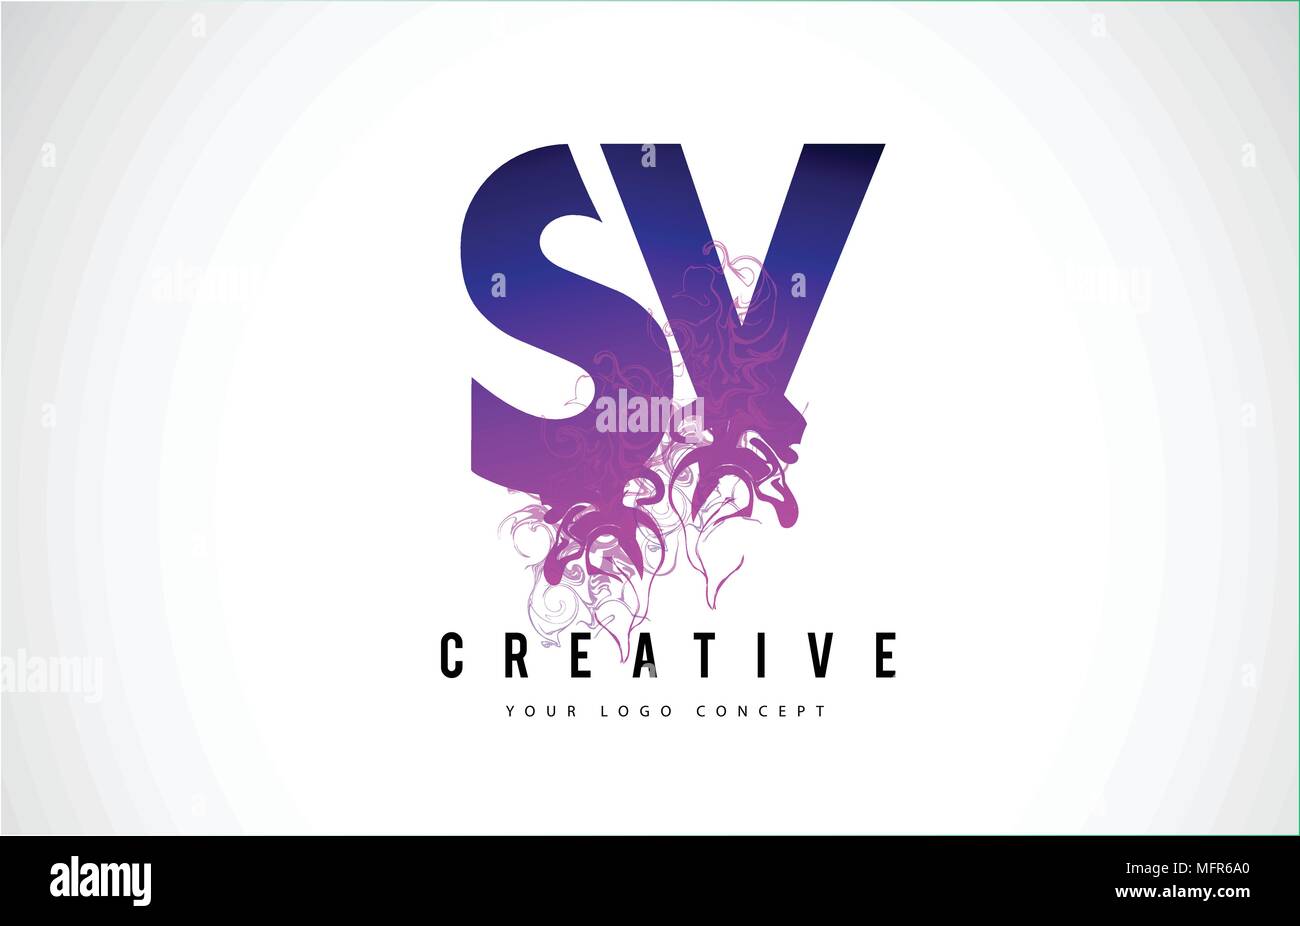 SV S V Lettre Violet Logo Design créatif avec effet liquide Vector Illustration. Illustration de Vecteur